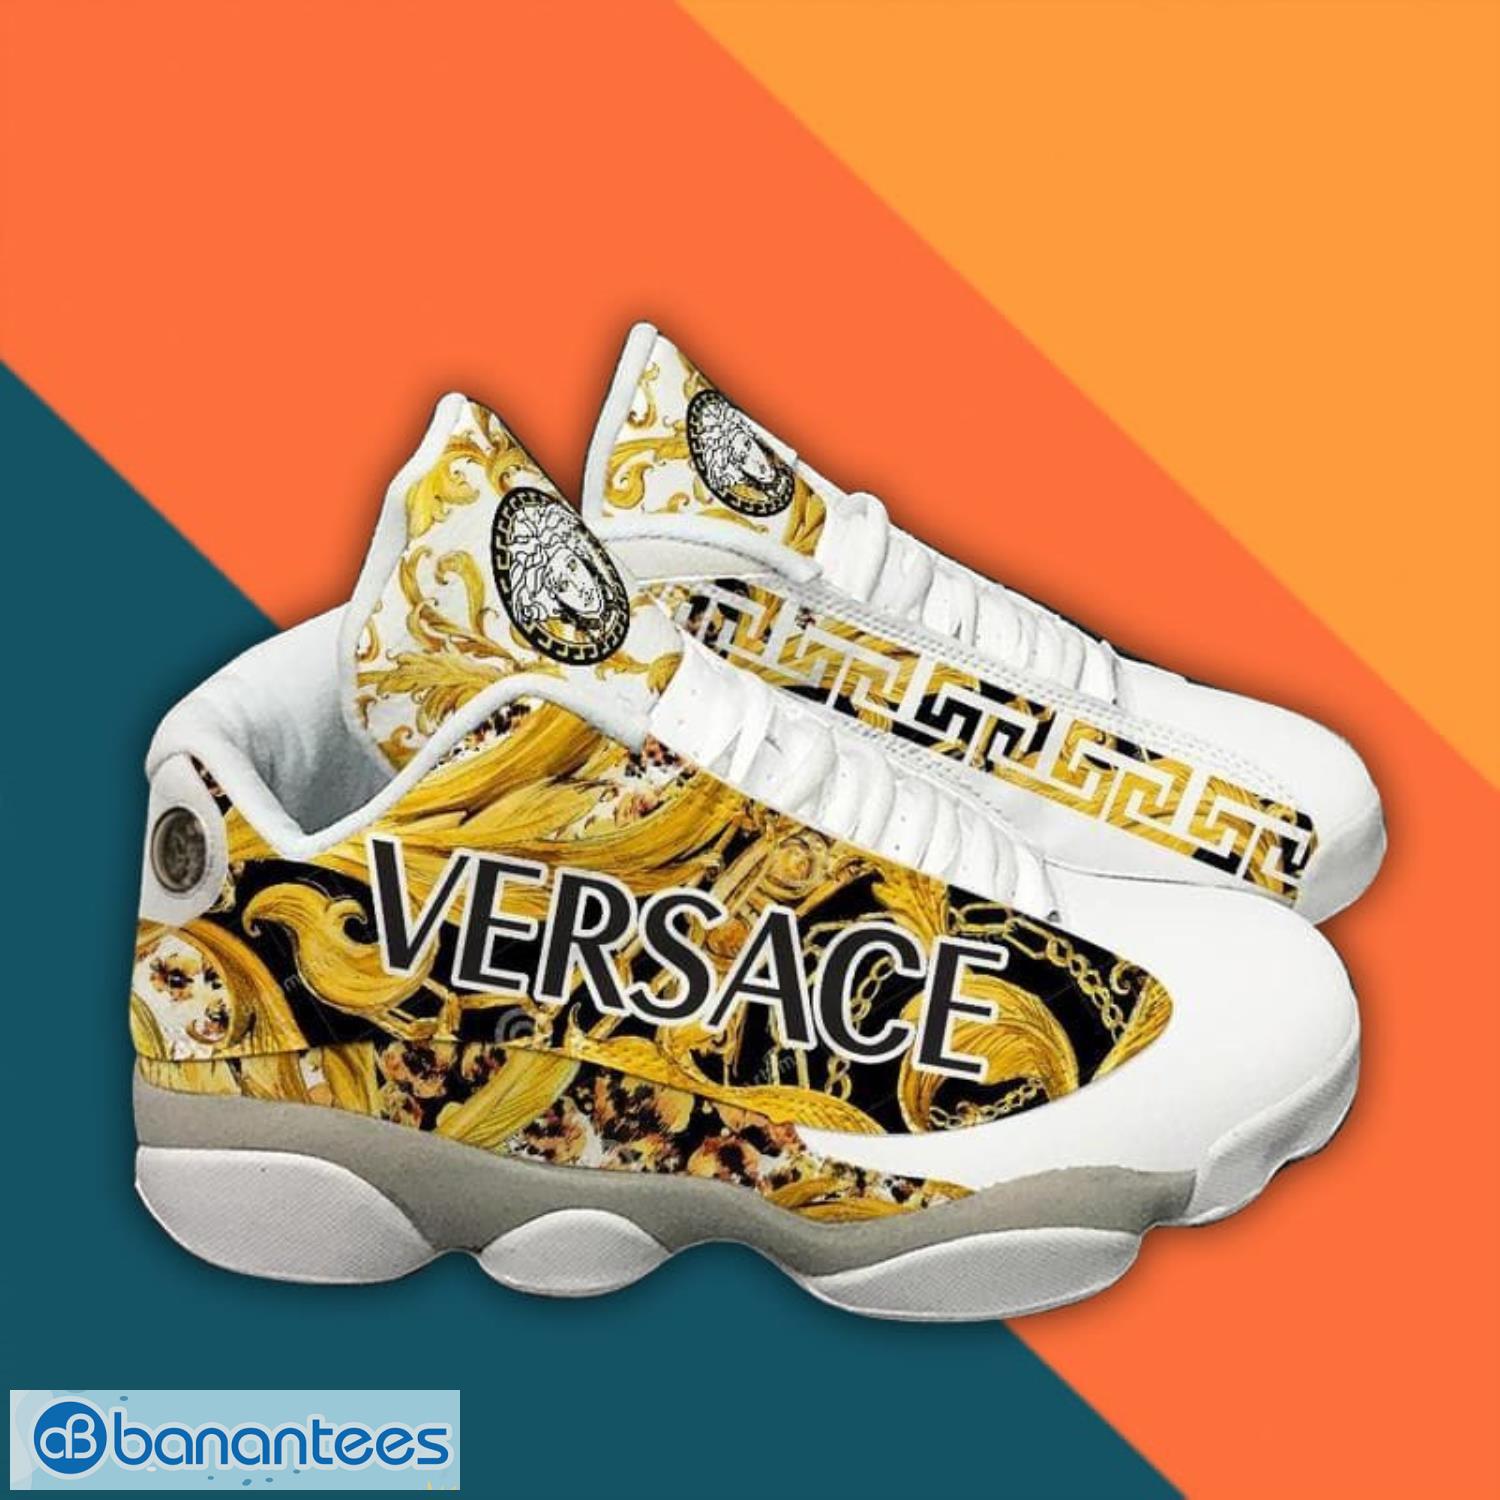 Versace Golden Shoes Air Jordan 13 Sneaker Product Photo 3